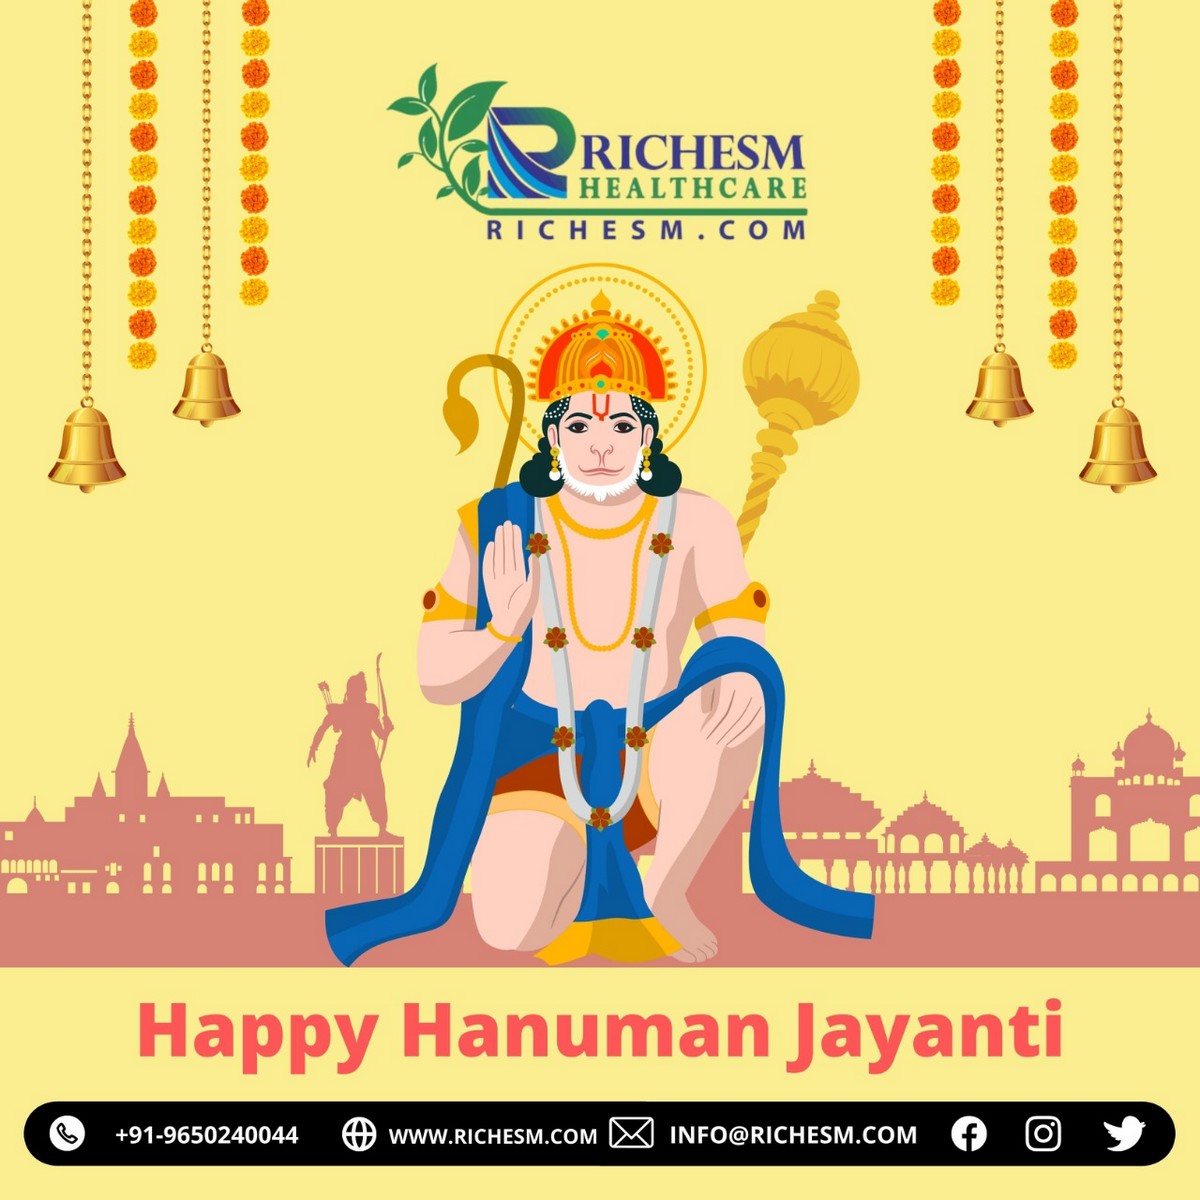 Wishing You All A Happy Hanuman Jayanti 2